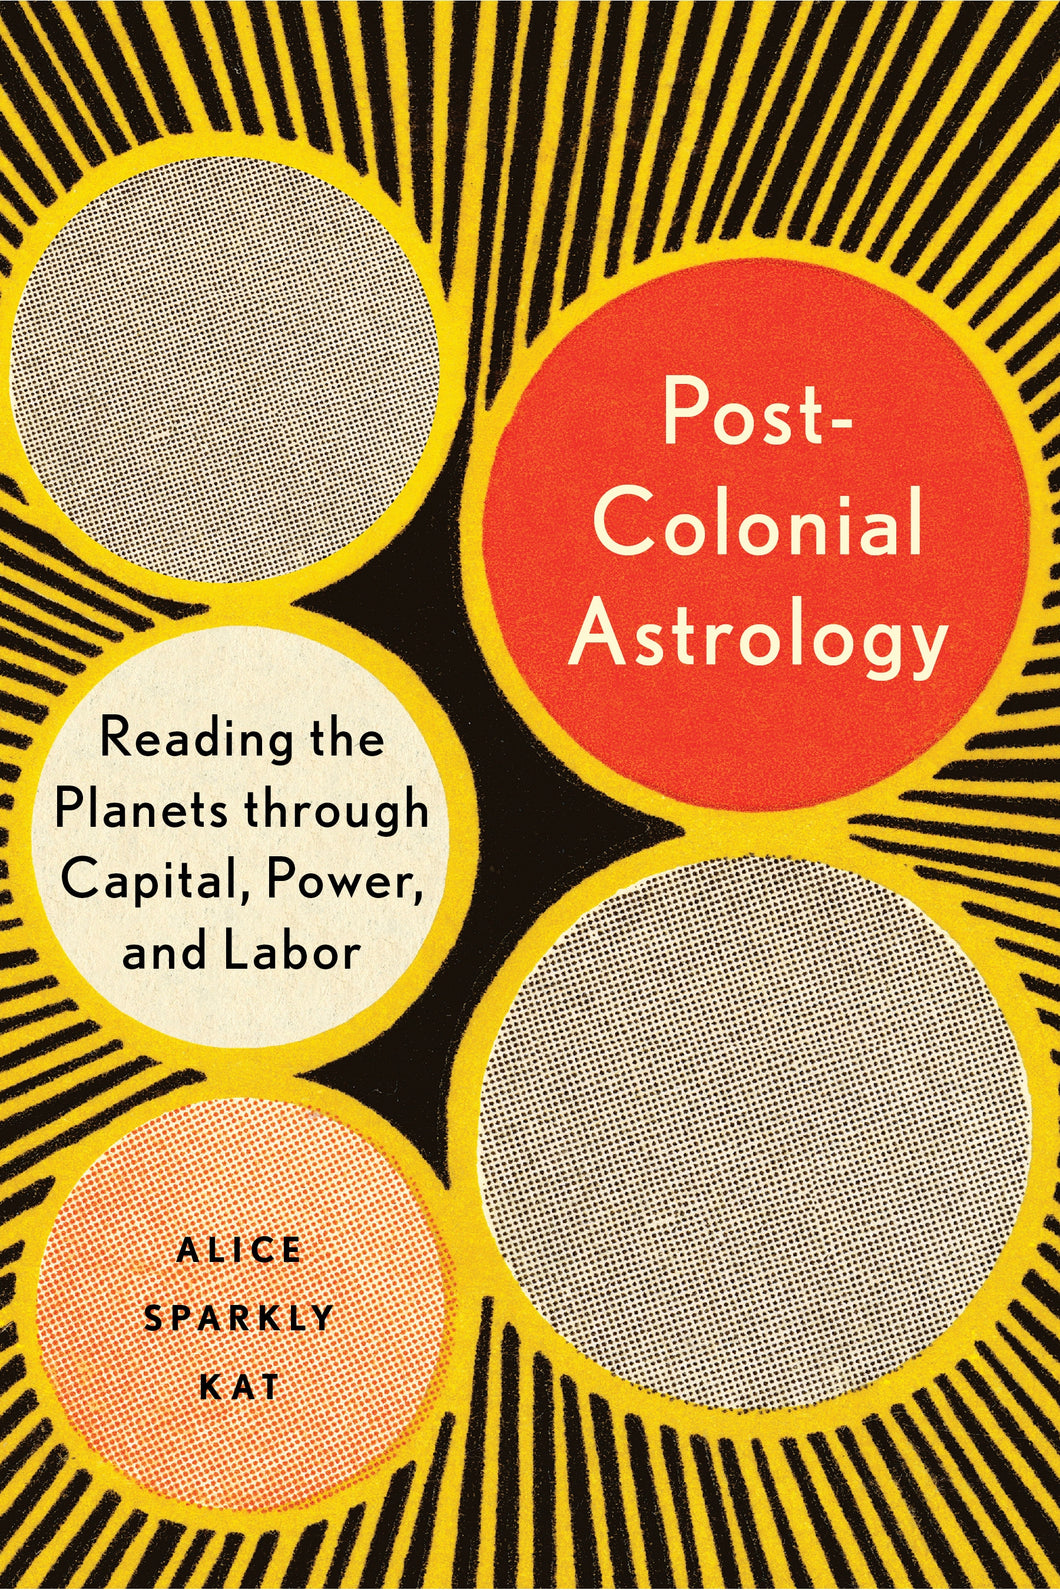 Postcolonial Astrology : A Radical Genealogy of the Planets ร้านหนังสือและสิ่งของ เป็นร้านหนังสือภาษาอังกฤษหายาก และร้านกาแฟ หรือ บุ๊คคาเฟ่ ตั้งอยู่สุขุมวิท กรุงเทพ